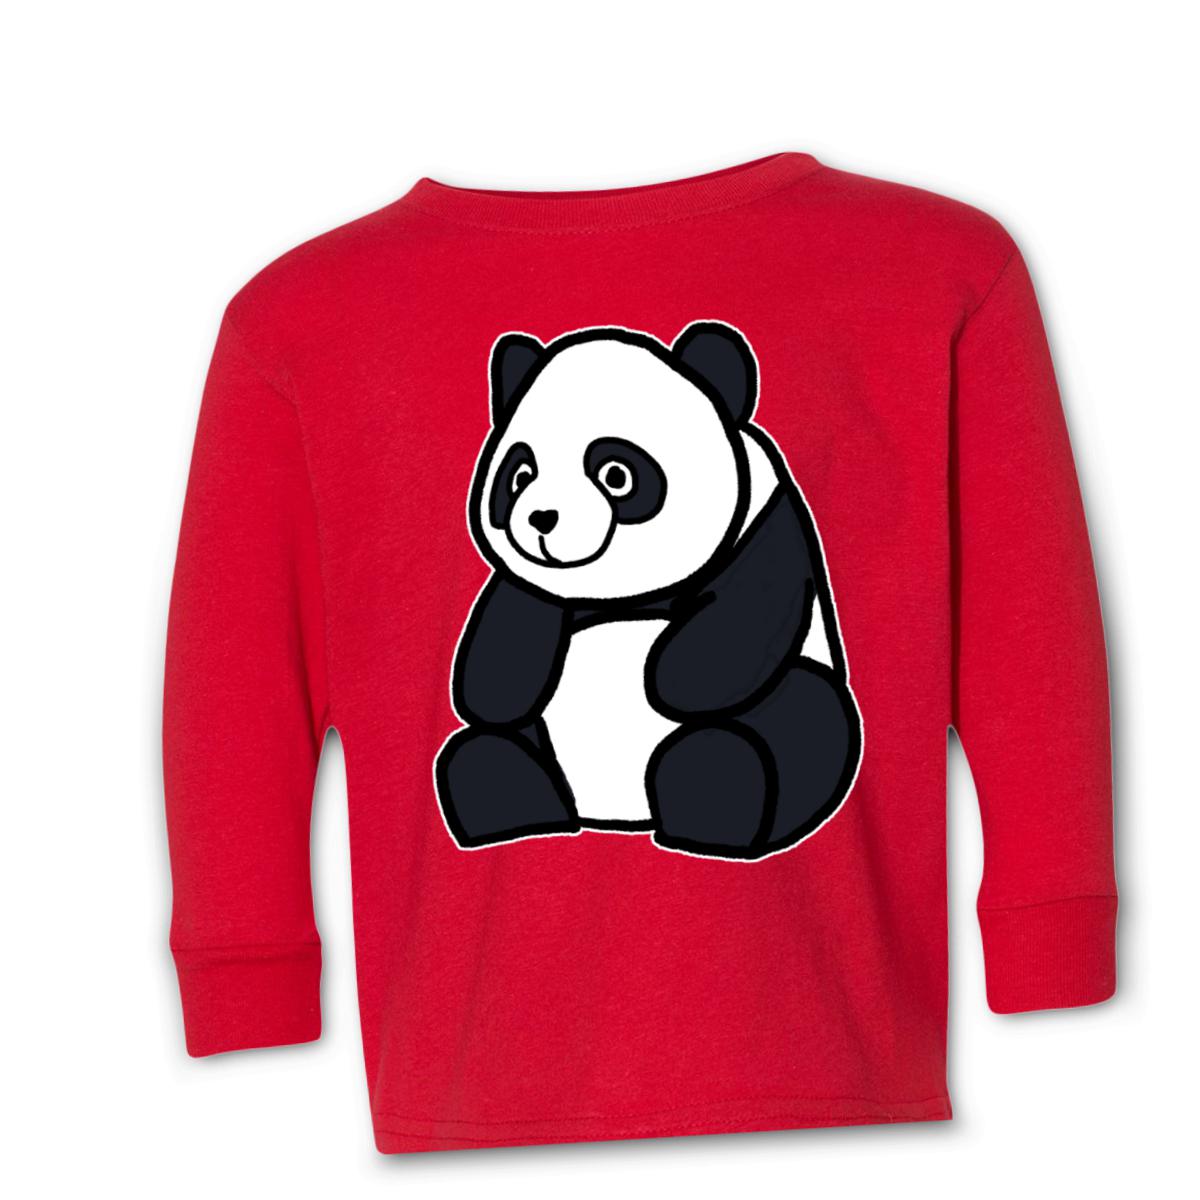 Panda Kid's Long Sleeve Tee Small red